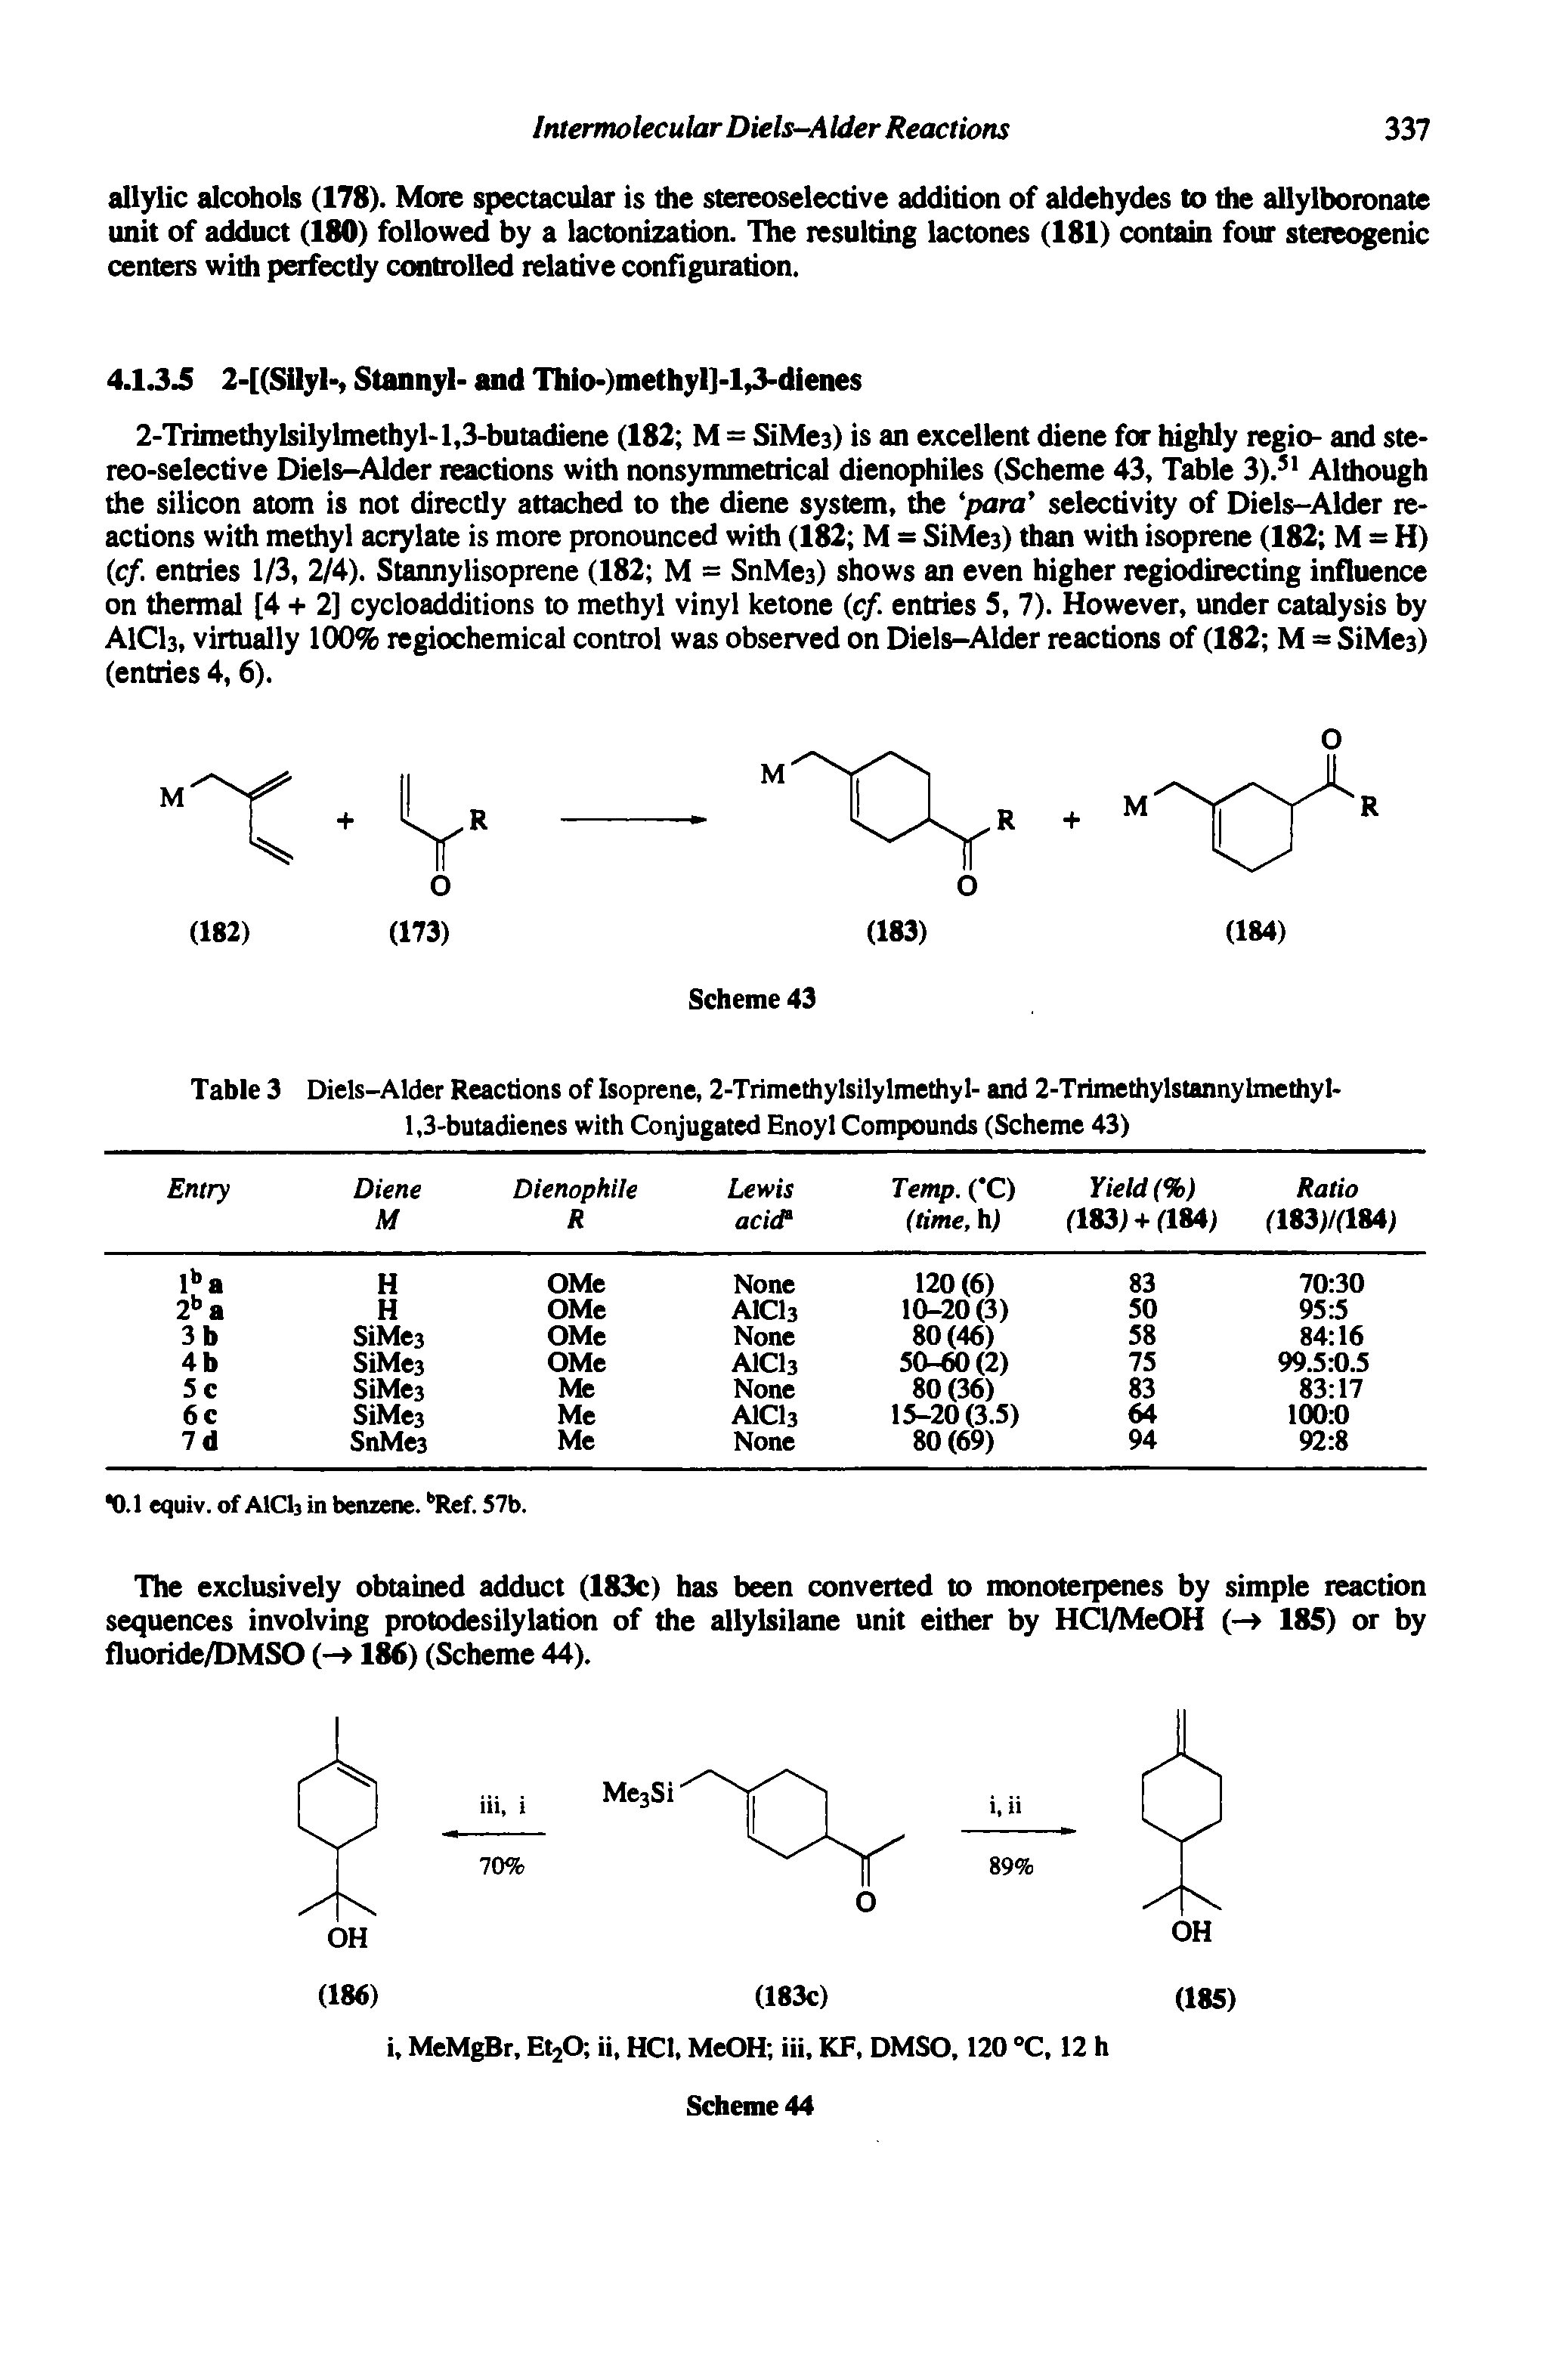 Table 3 Diels-Alder Reactions of Isoprene, 2-Trimethylsilylmethyl- and 2-Ttimethylstannylmethyl-1,3-butadienes with Conjugated Enoyl Compounds (Scheme 43)...